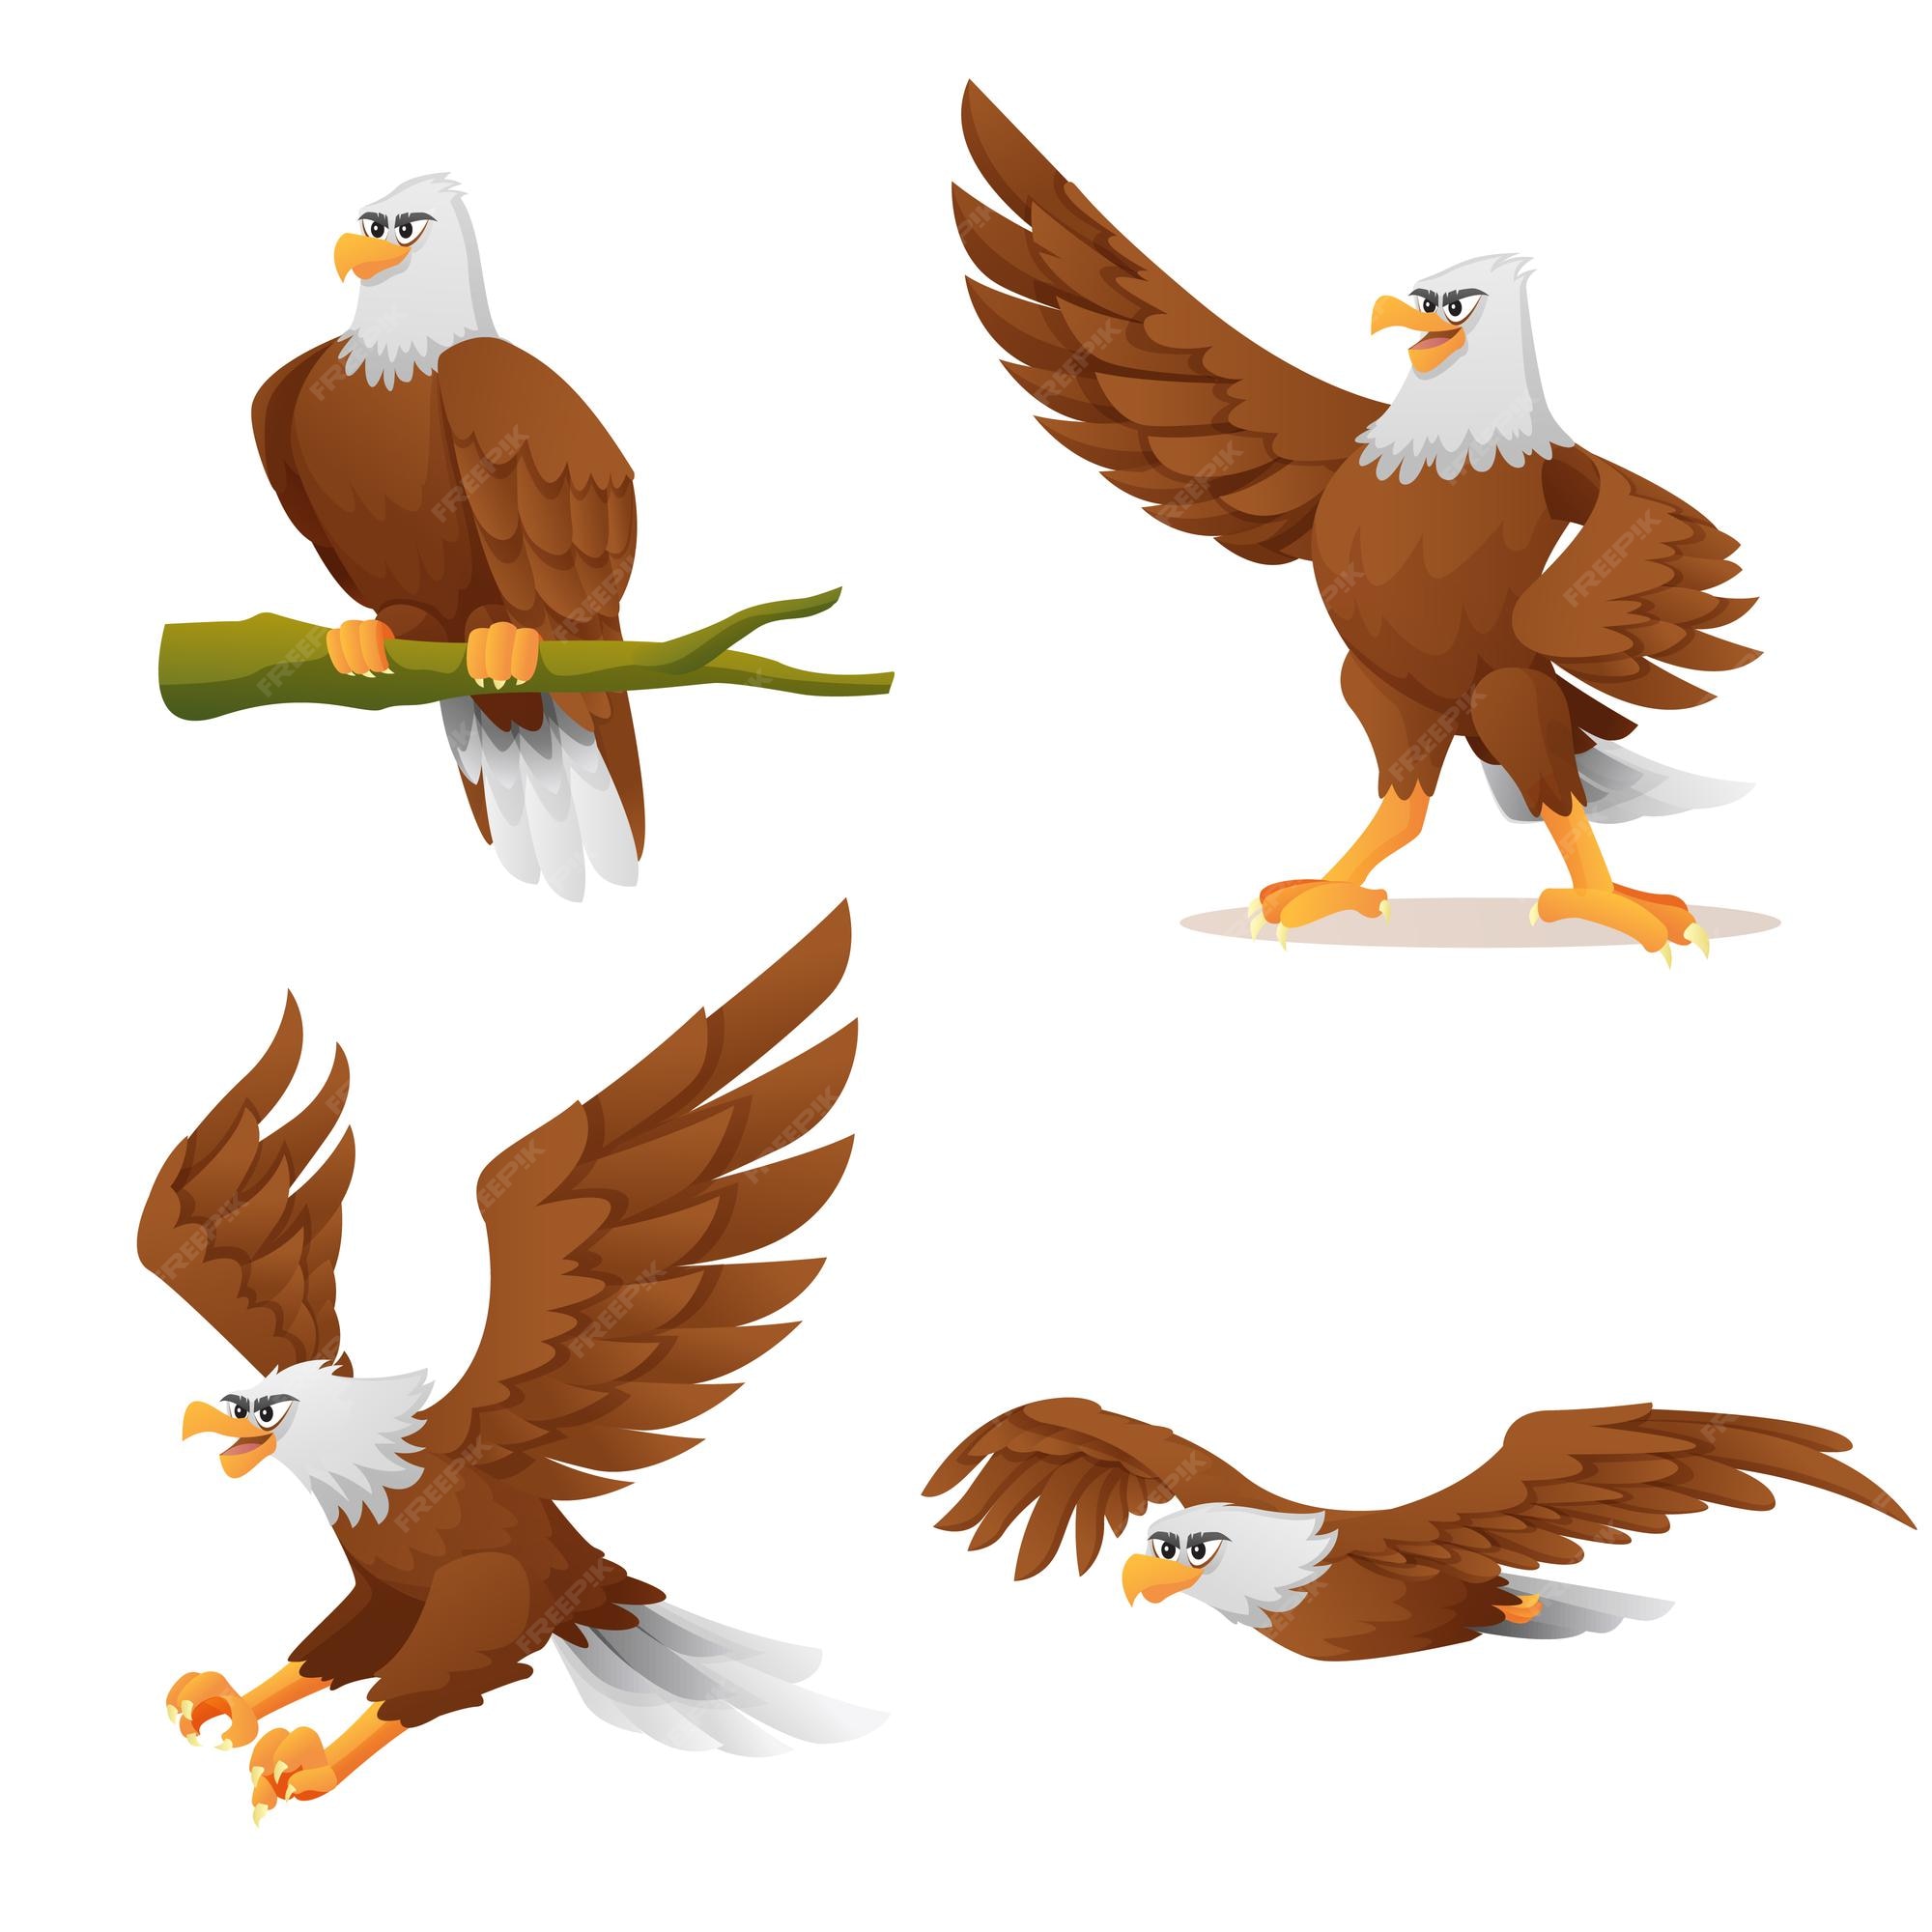 Bald Eagle Cartoon Images - Free Download on Freepik